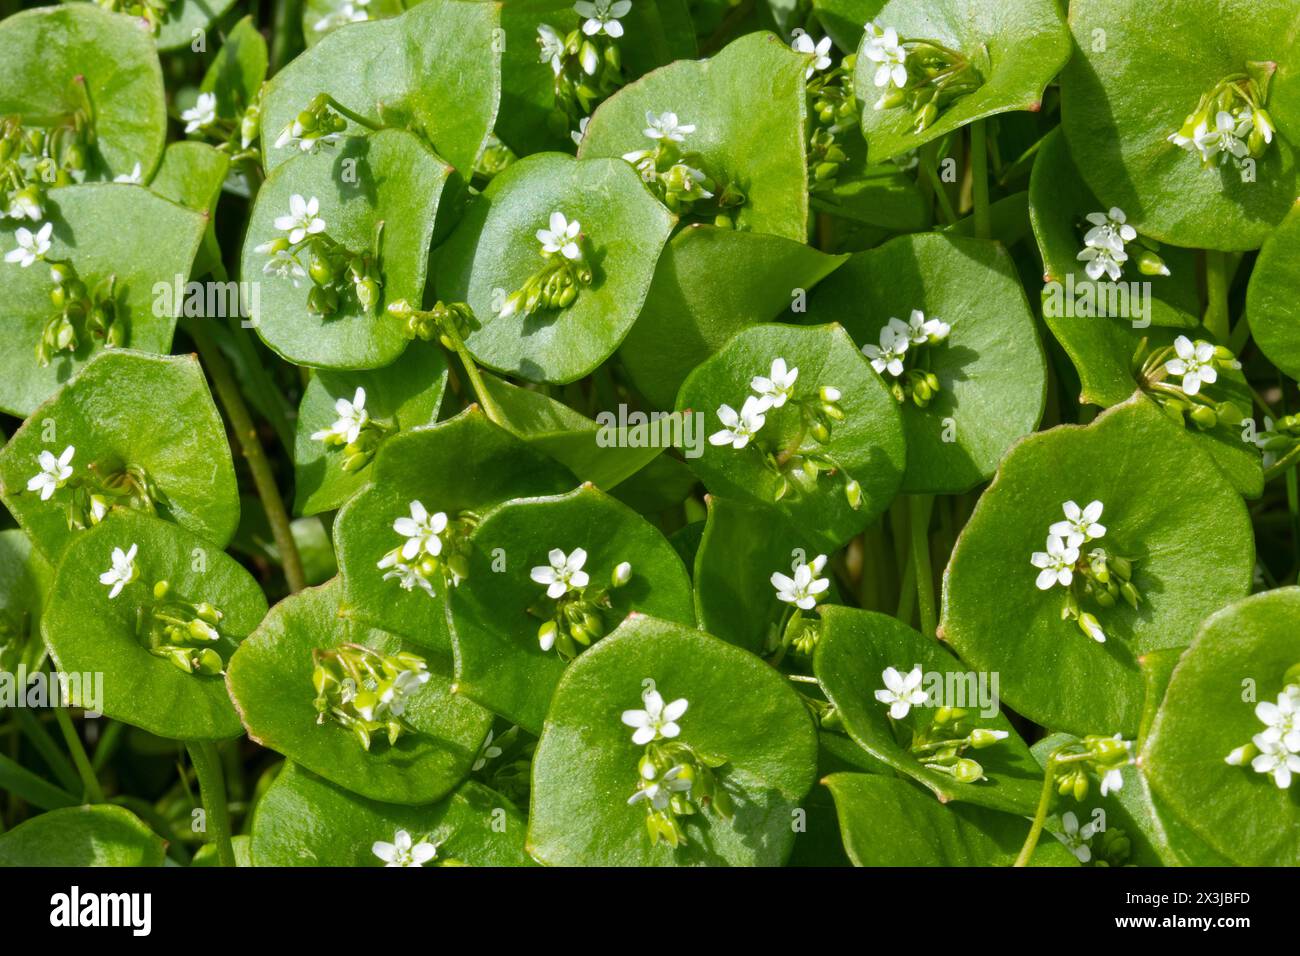 Fresh flowering winter purslane plants close up full frame as background Stock Photo